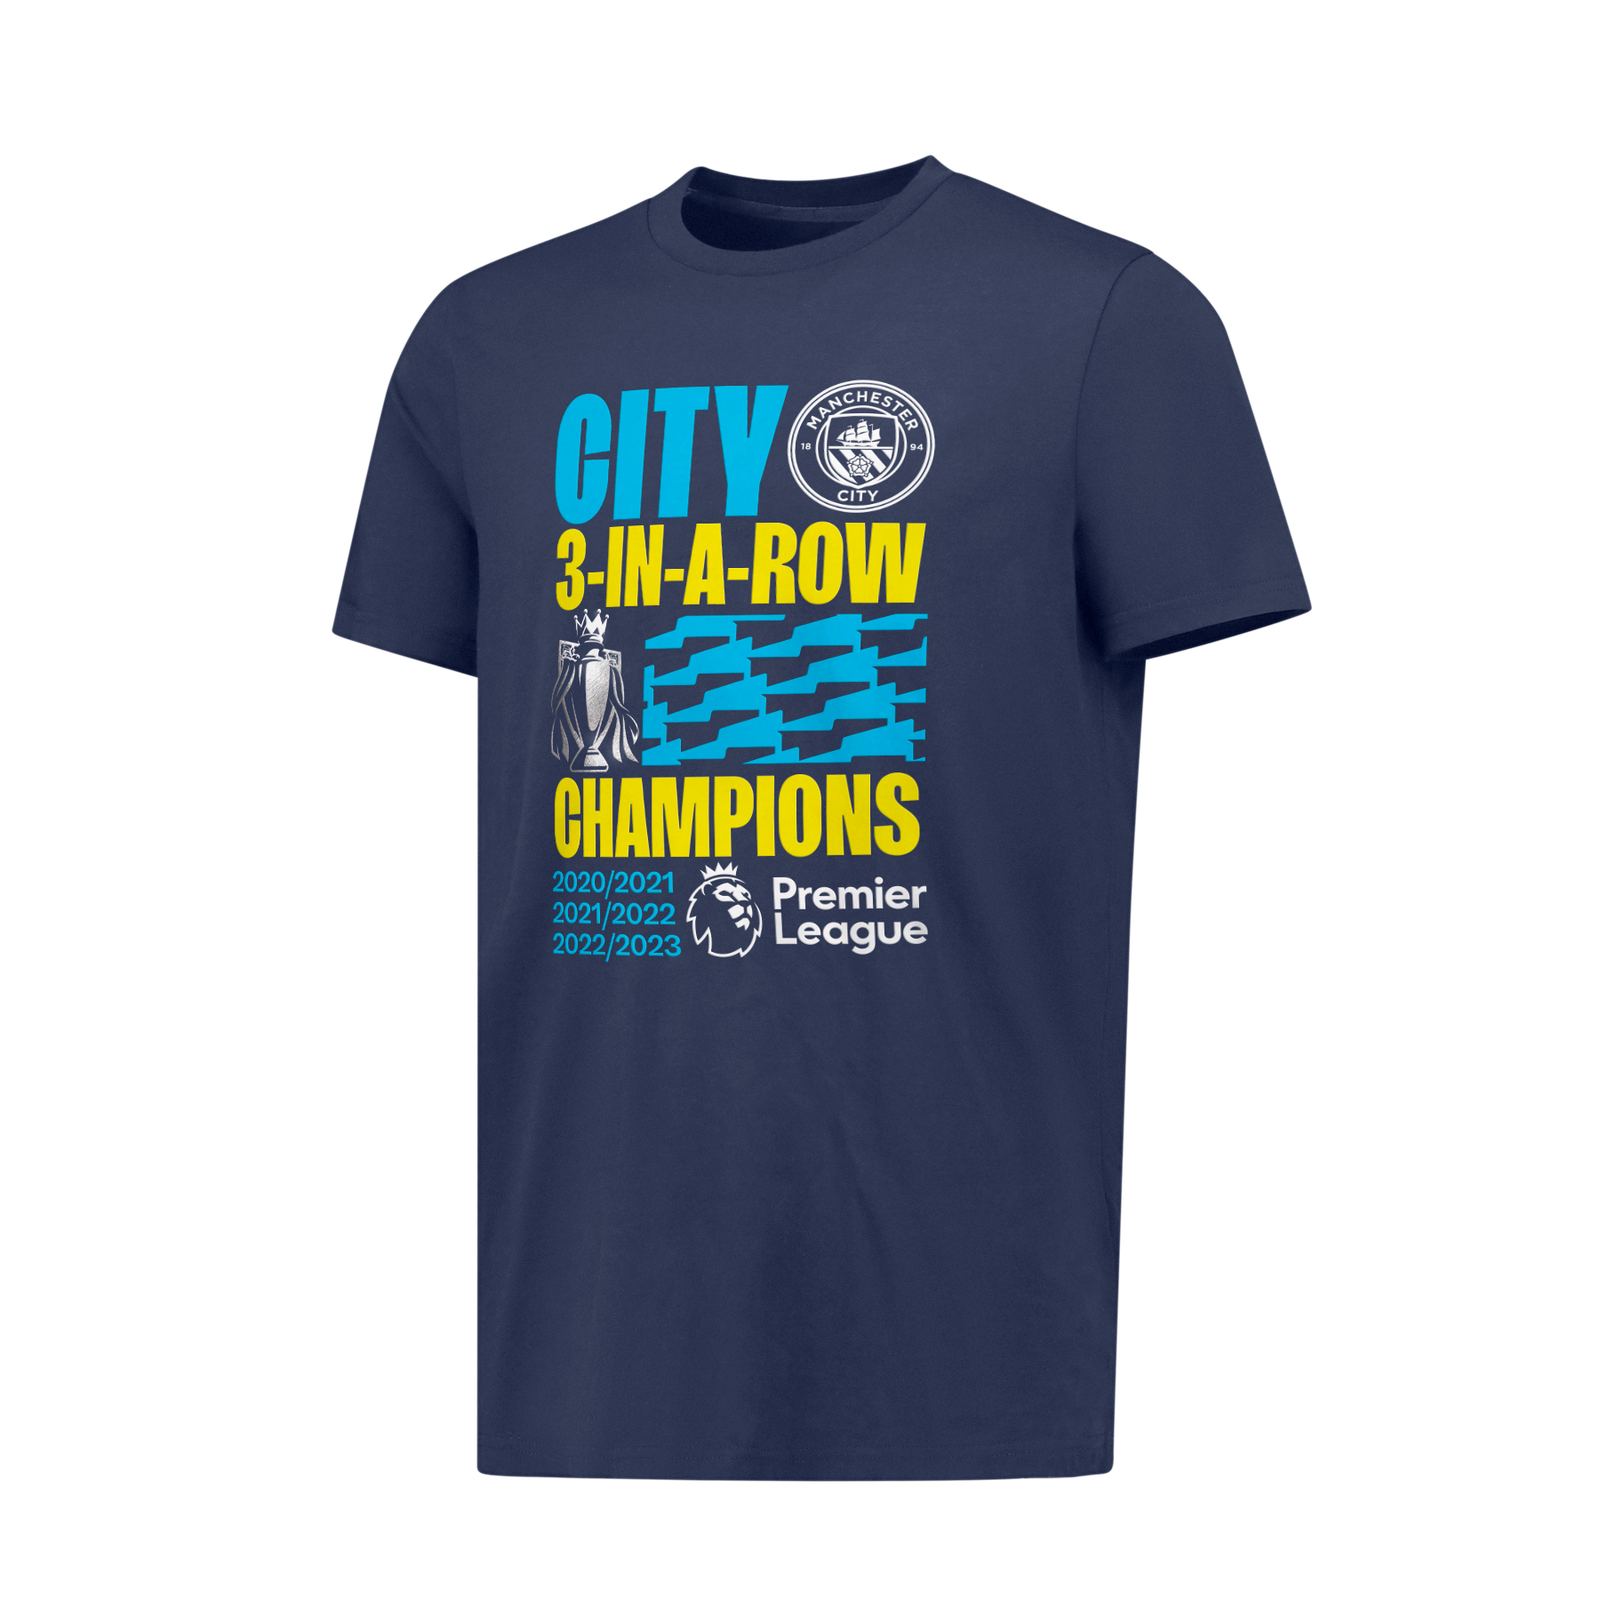 League champions T-Shirt